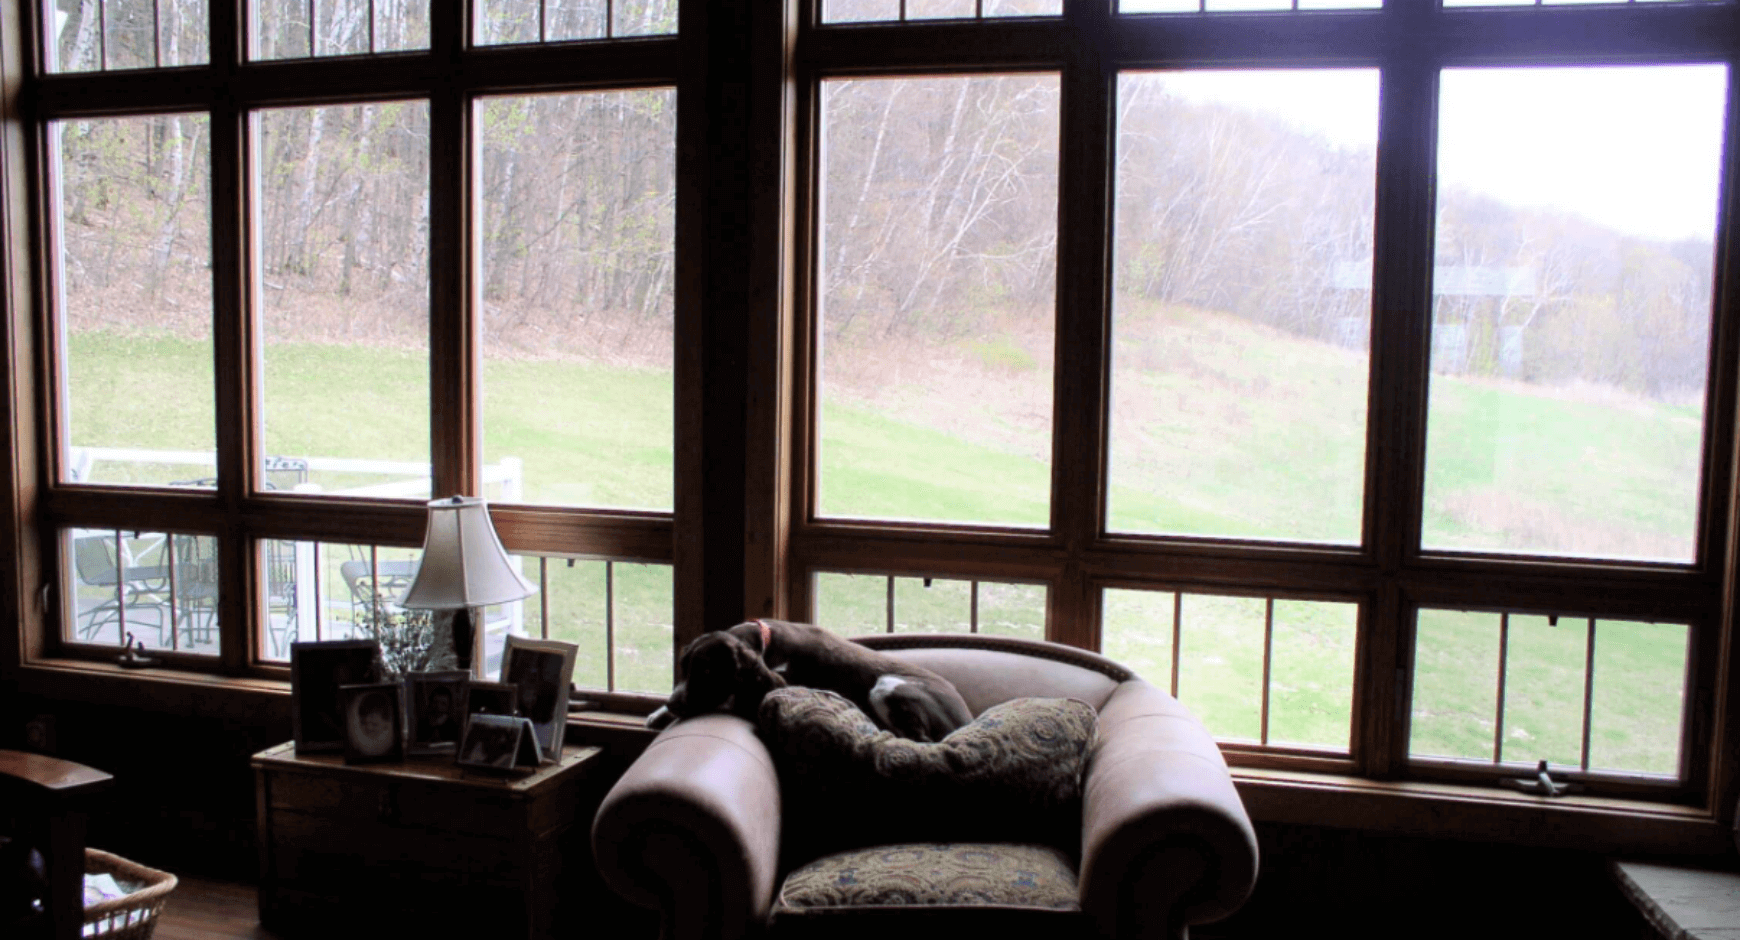 Fibrex window in a cabin style home